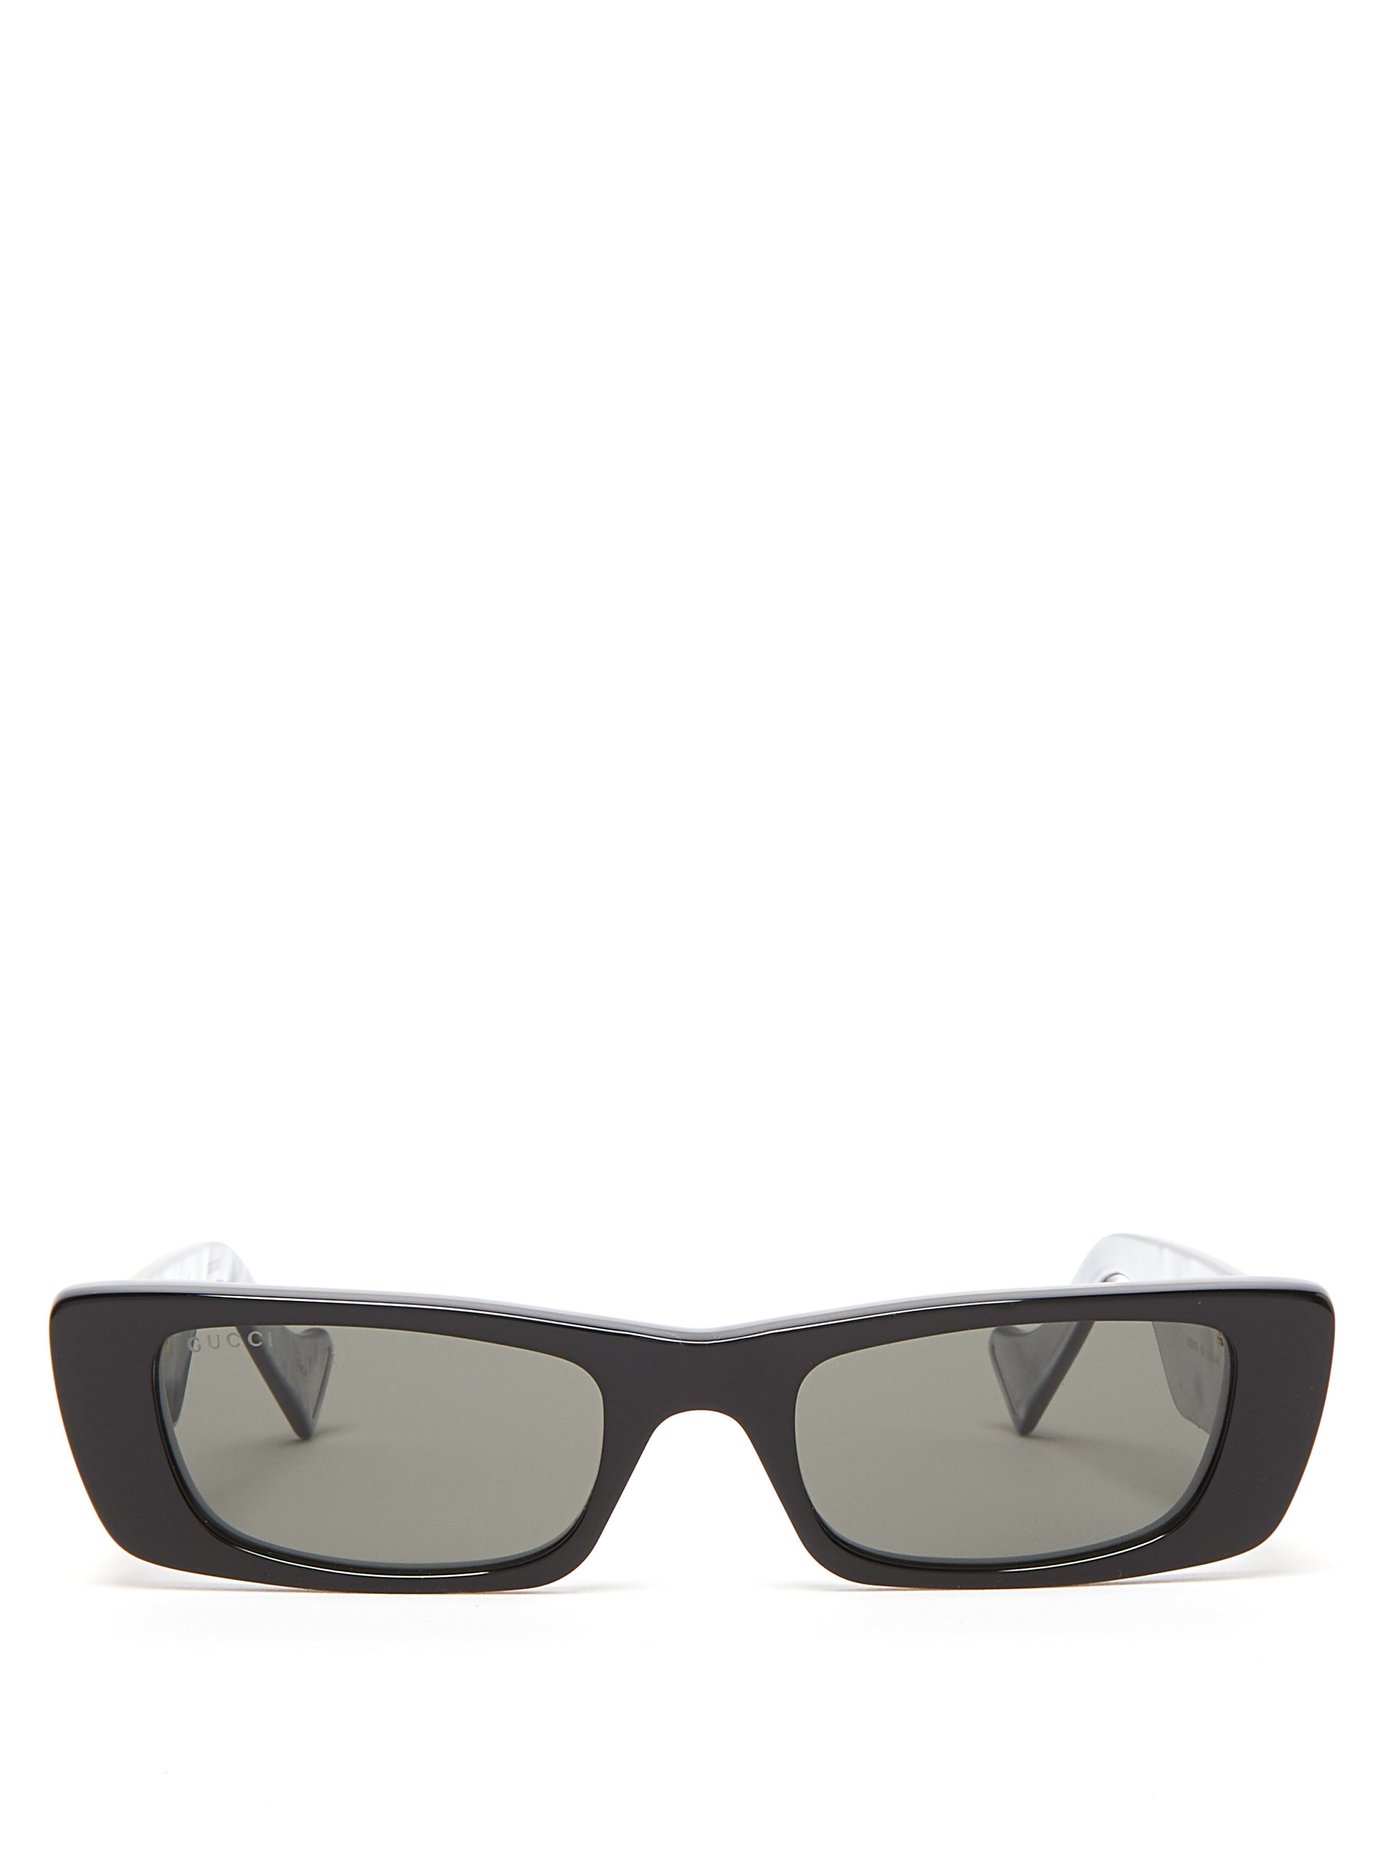 rectangular frame gucci sunglasses